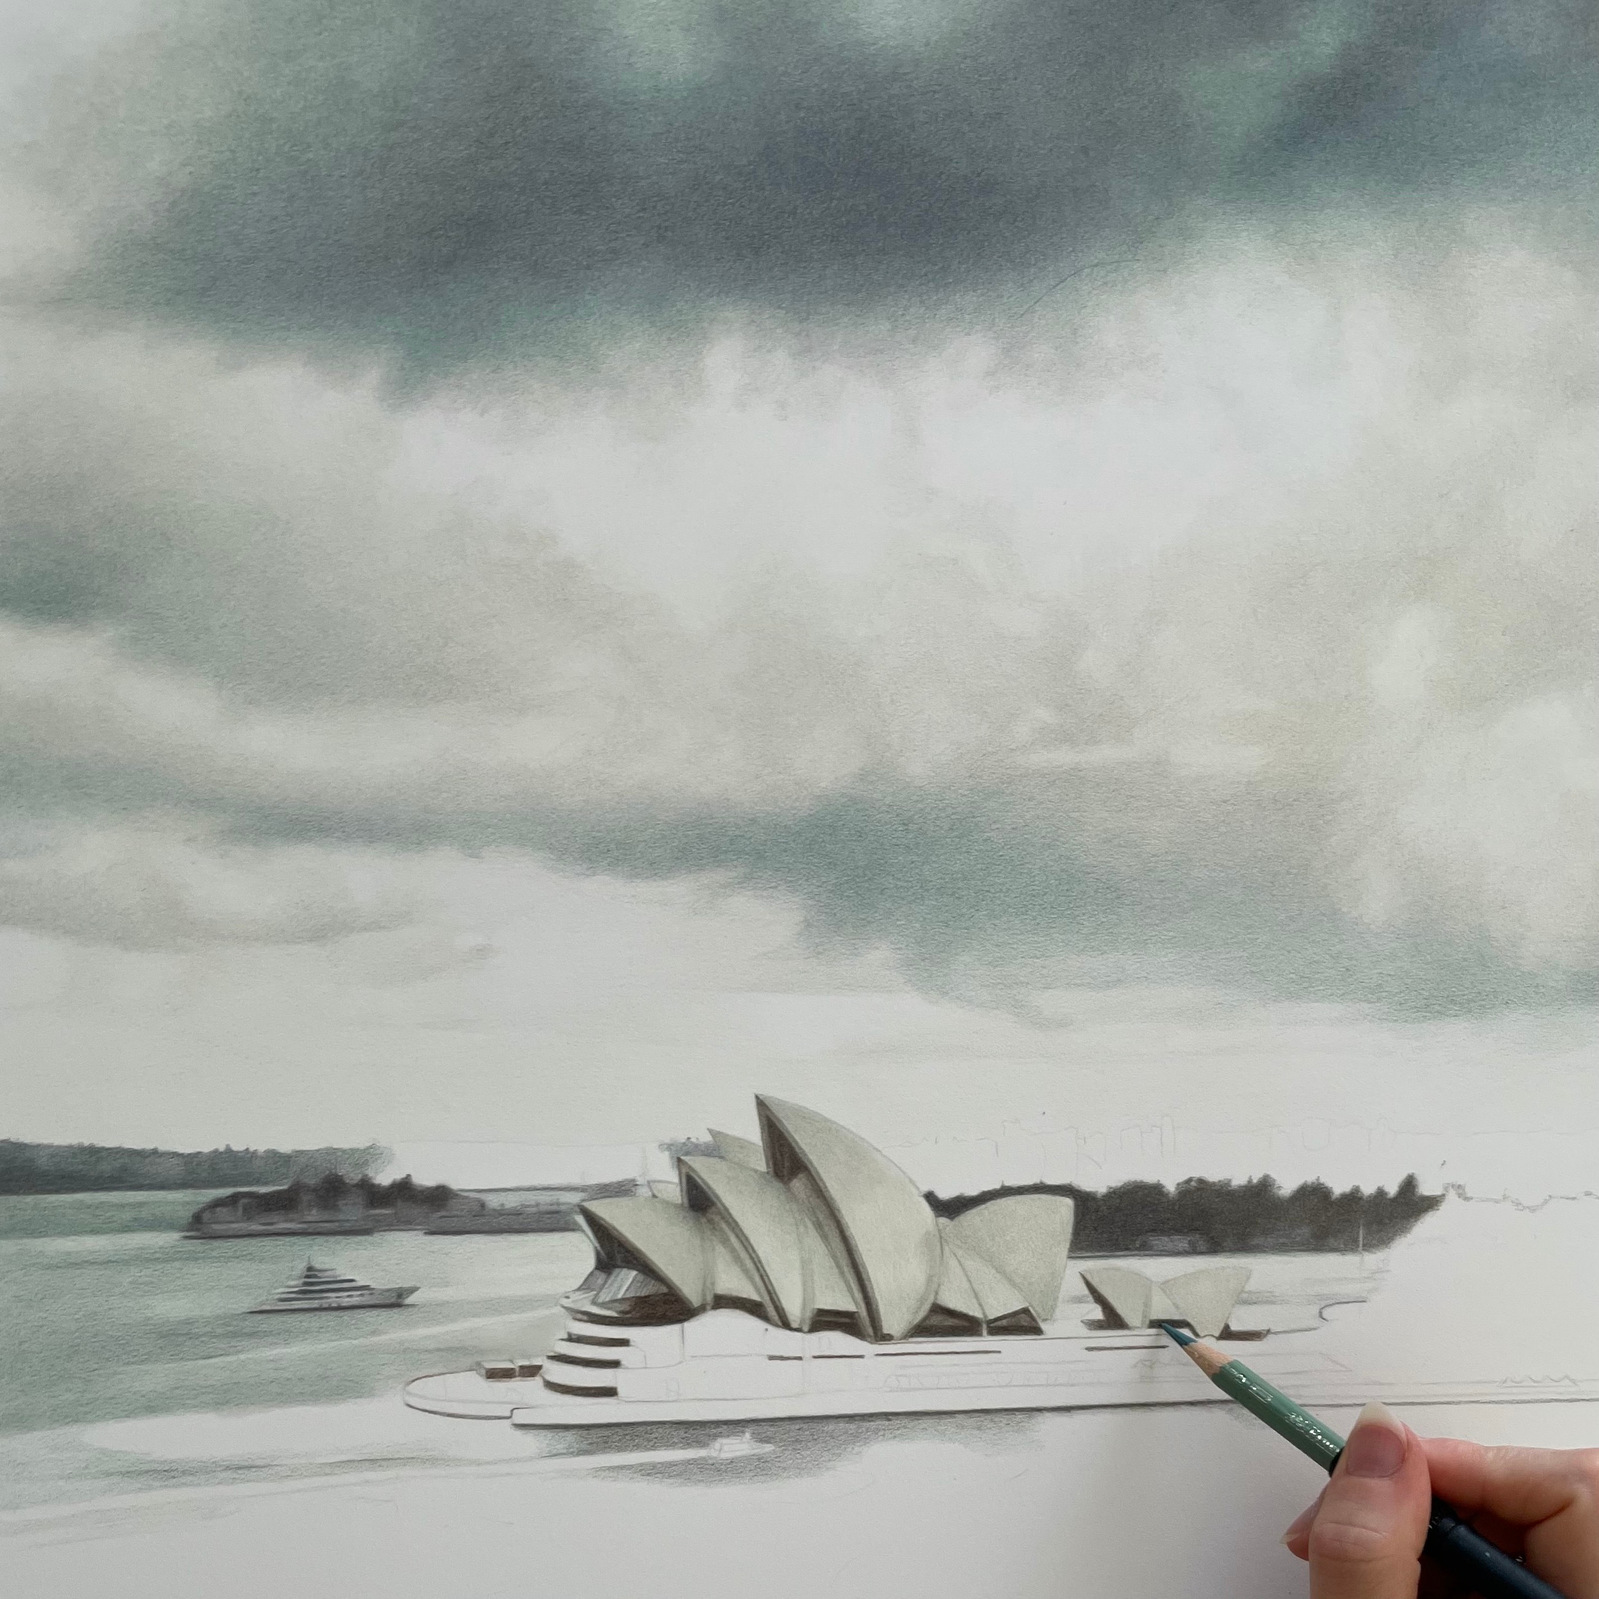 Work in progress of Sydney Opera House artwork